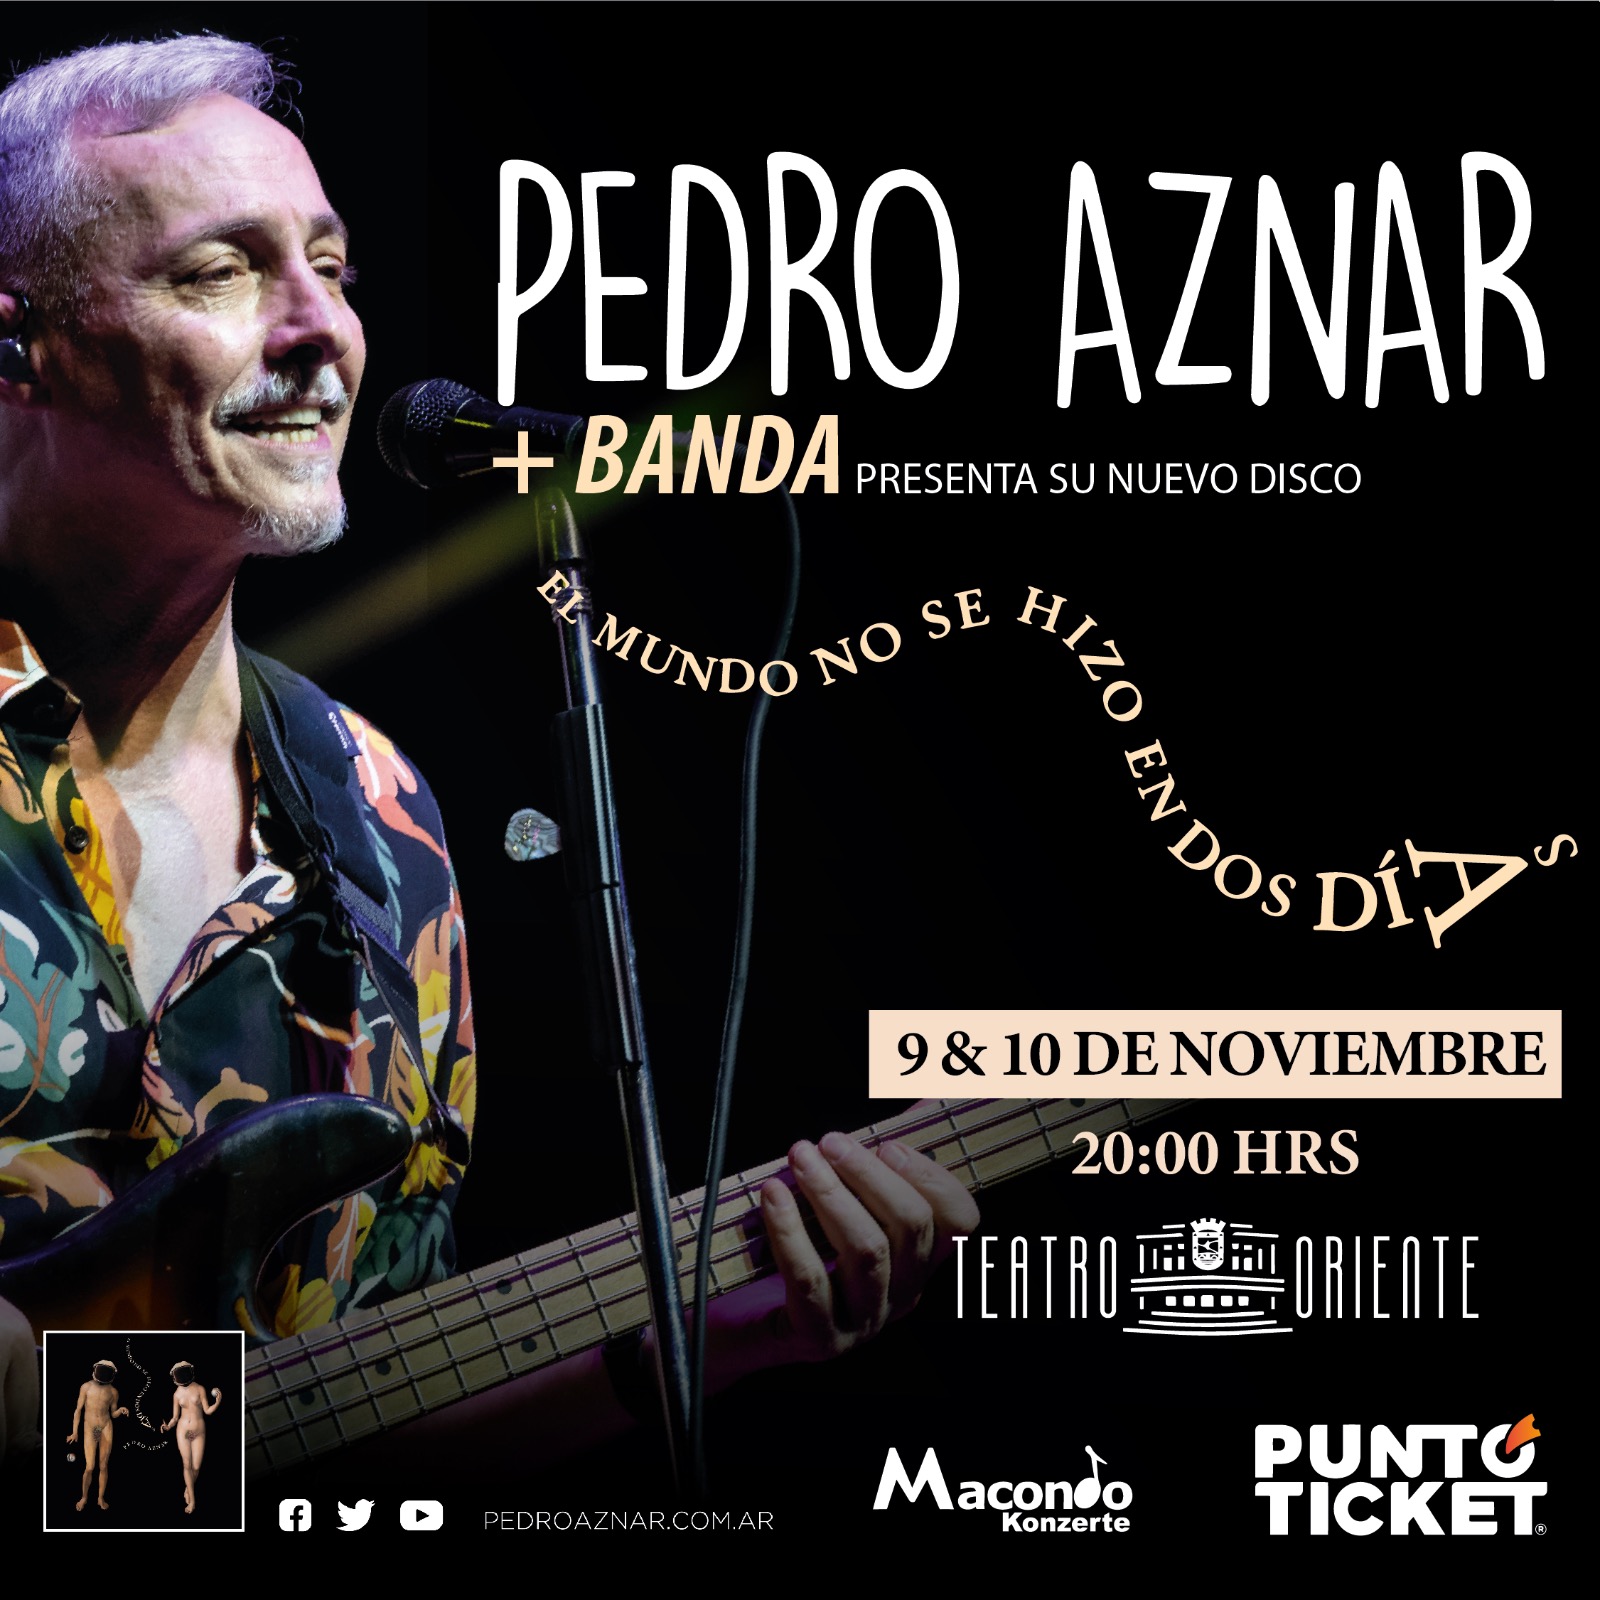 Pedro Aznar to present two shows at Teatro Oriente